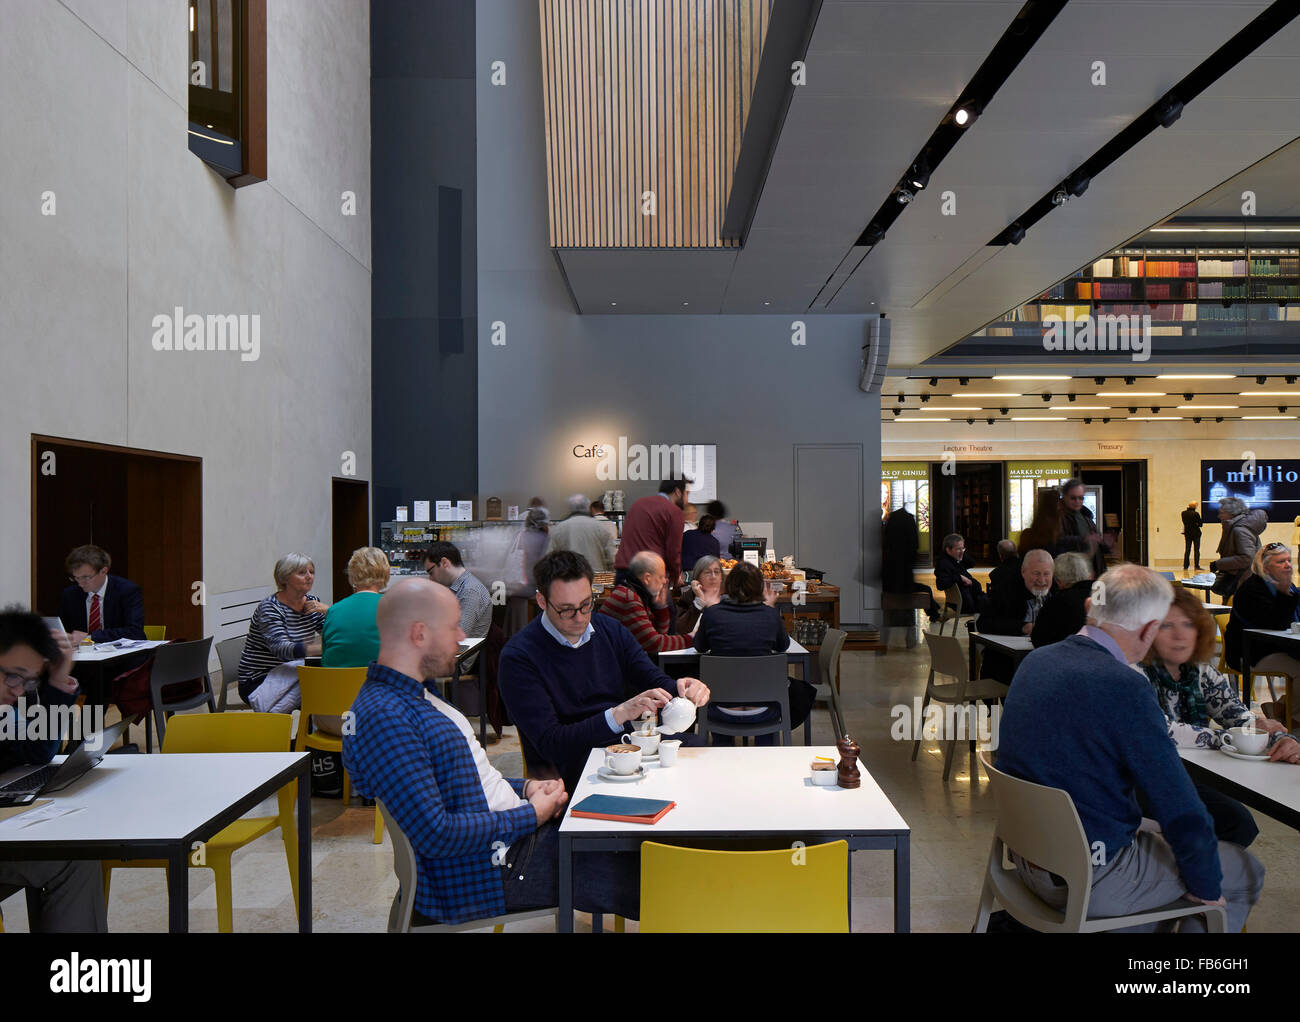 Café. Weston Library, Oxford, United Kingdom. Architect: Wilkinson Eyre, 2015. Stock Photo